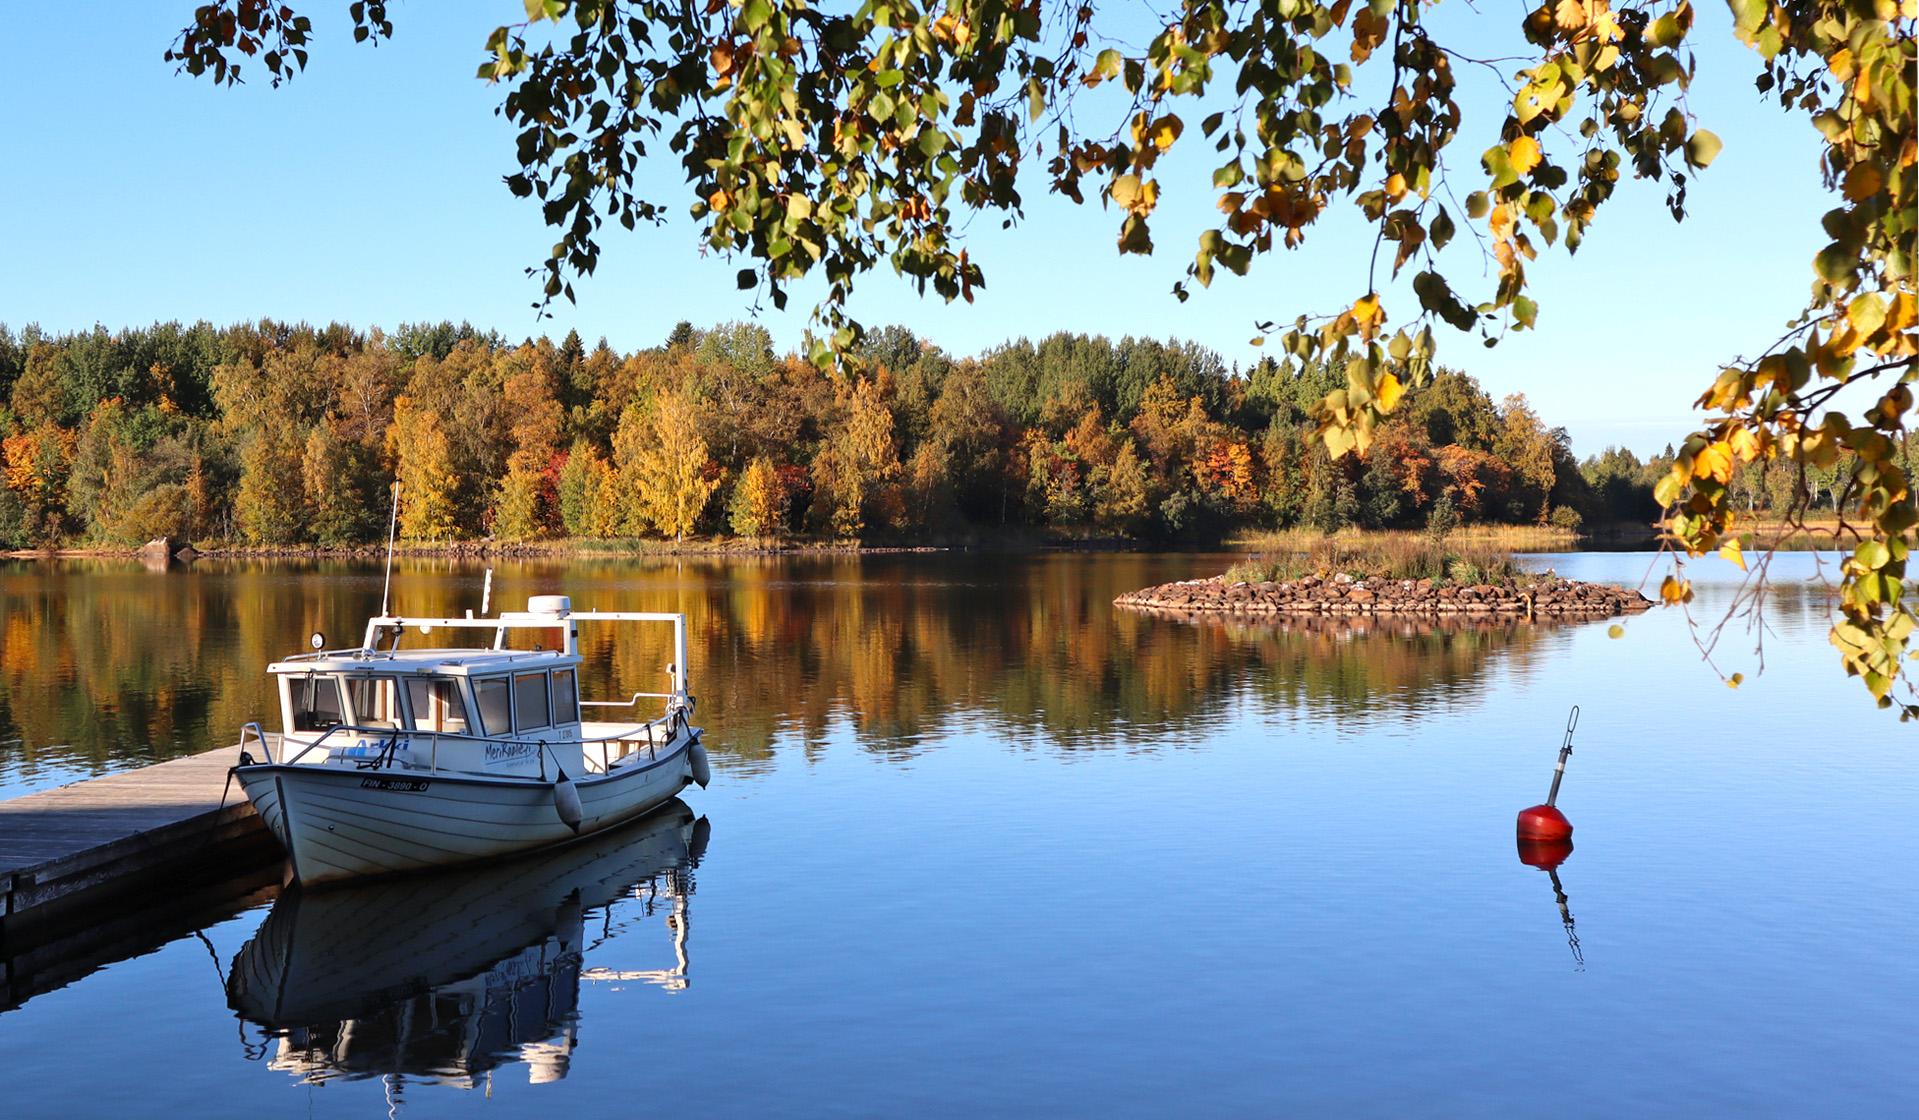 Лодка и док на берегу моря. Осенний пейзаж на заднем плане.